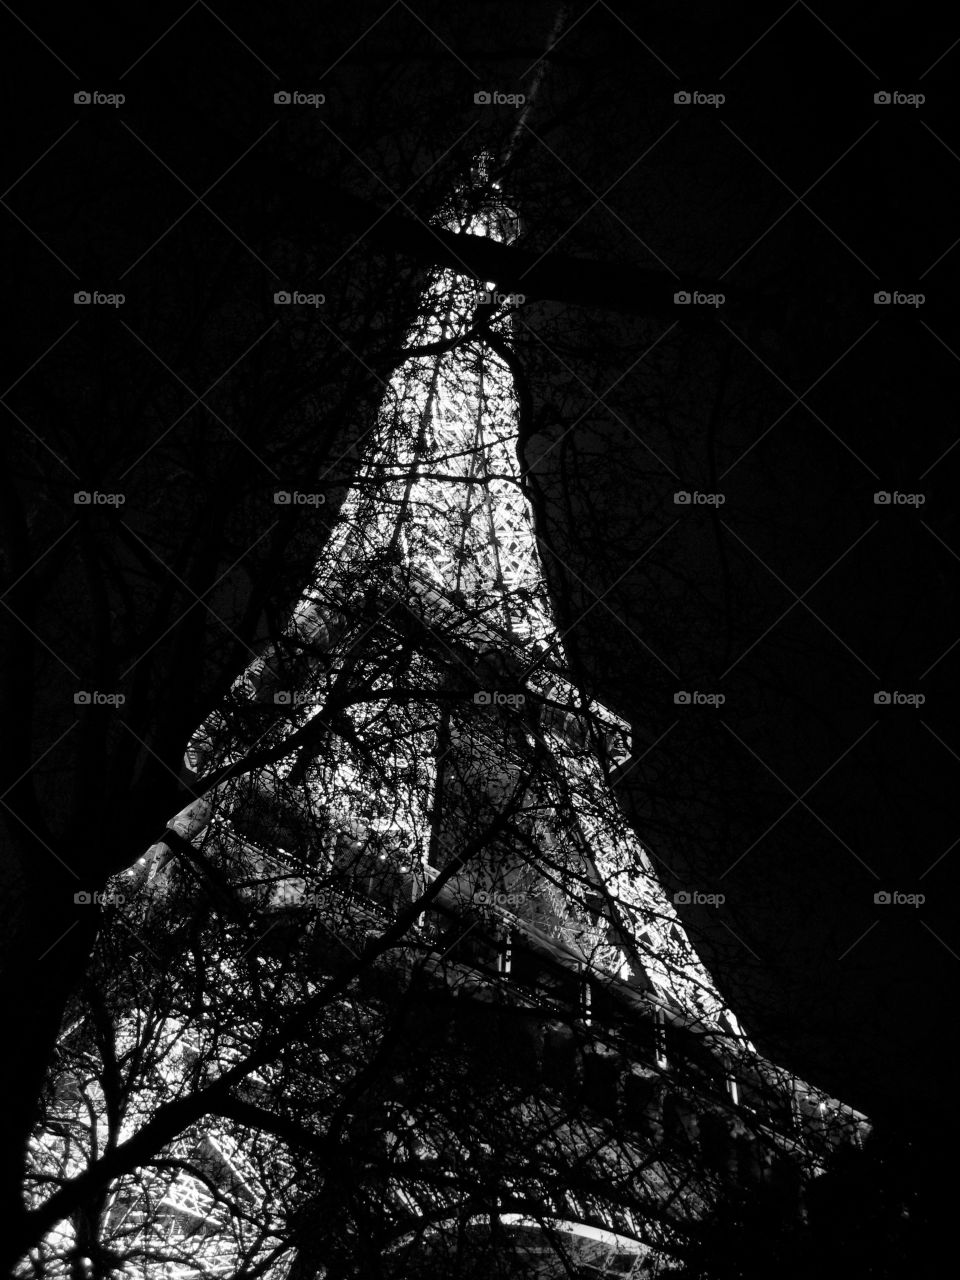 Eiffeltower at night